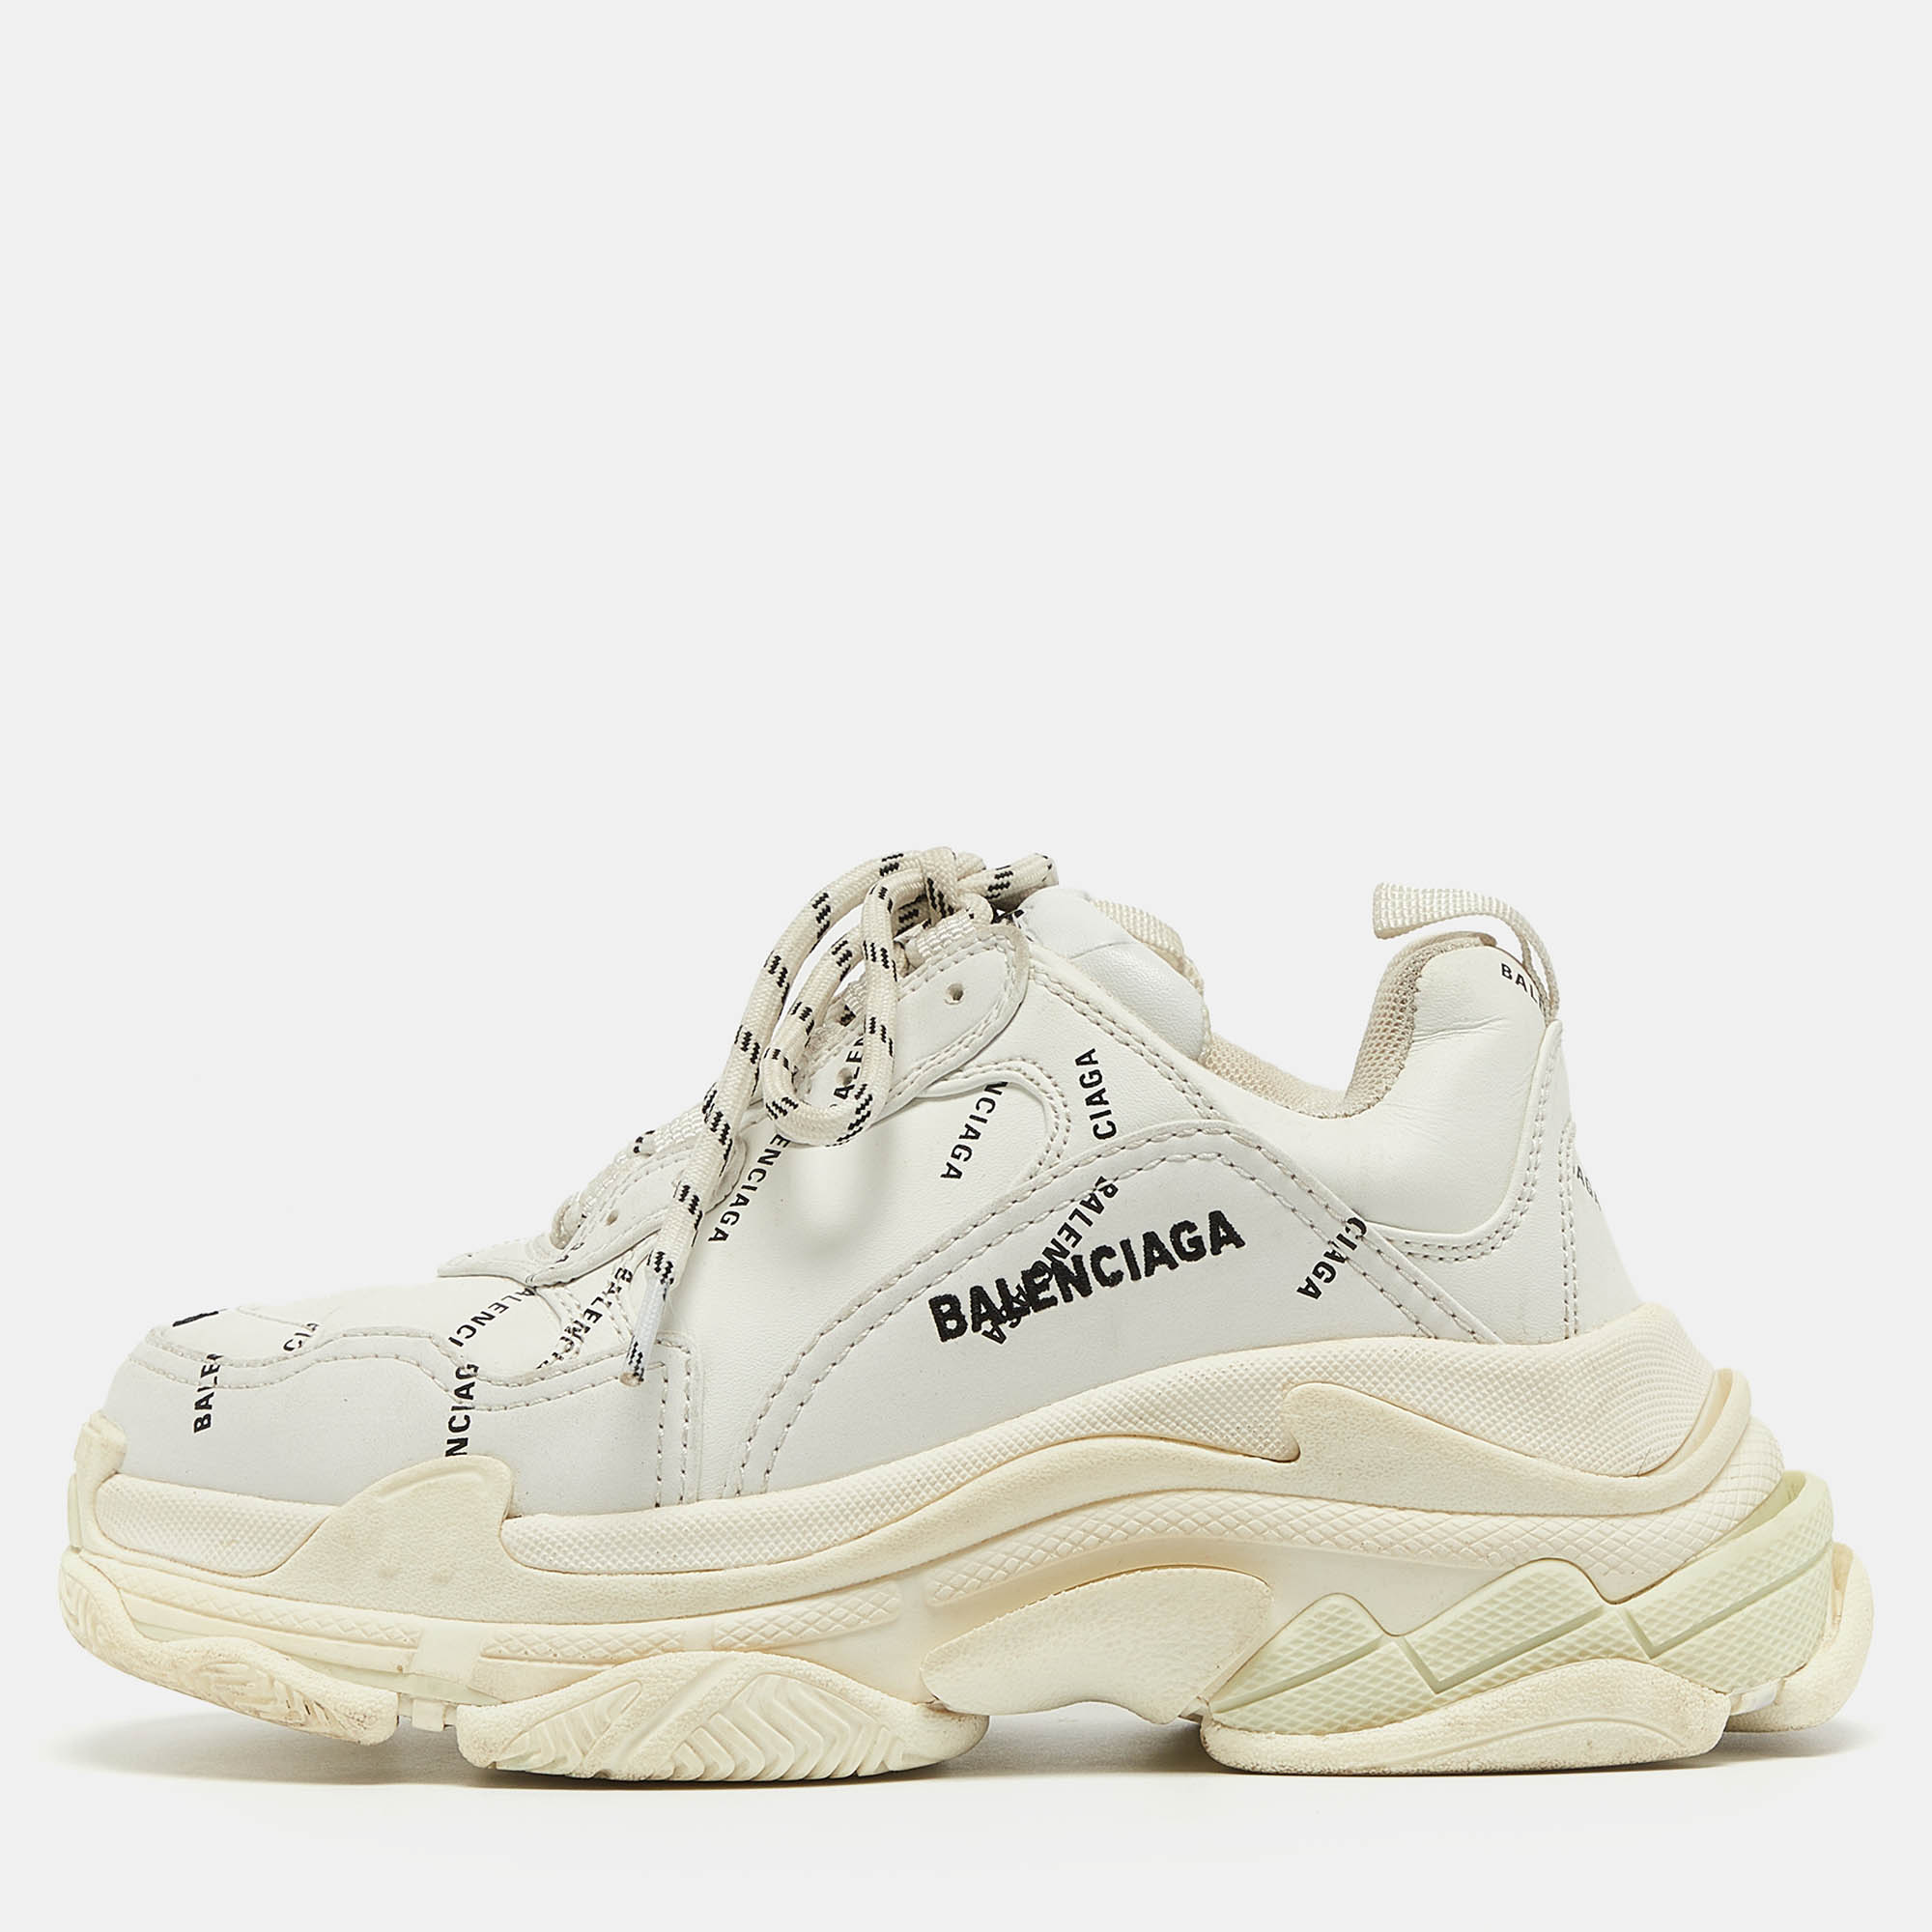 Balenciaga white logo print leather triple s sneakers size 36